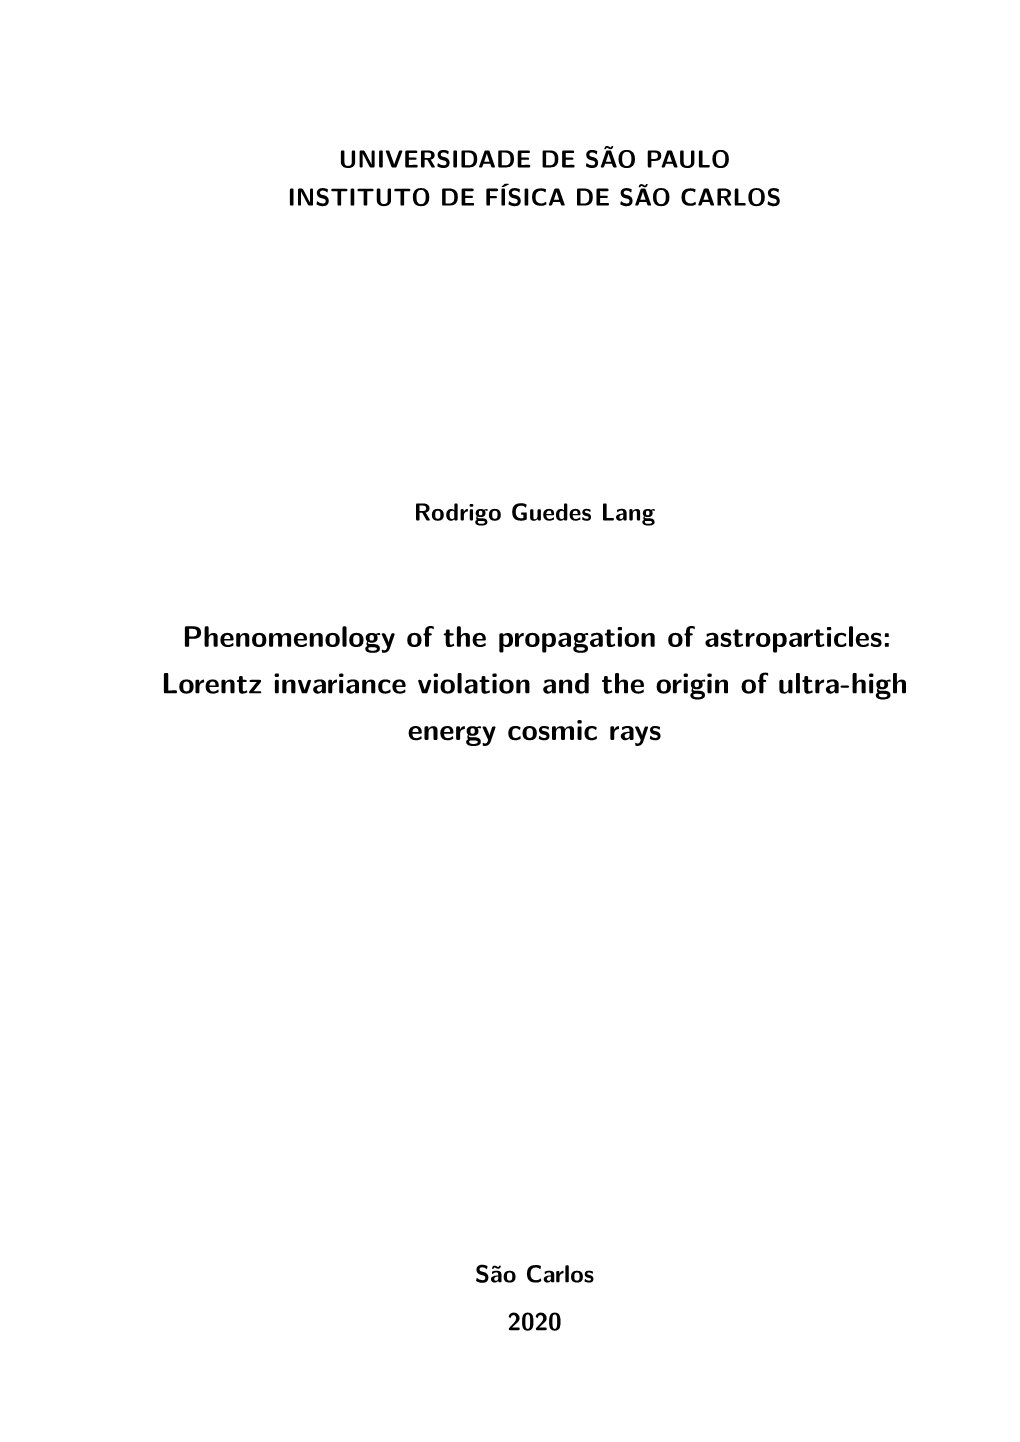 Lorentz Invariance Violation and the Origin of Ultra-High Energy Cosmic Rays